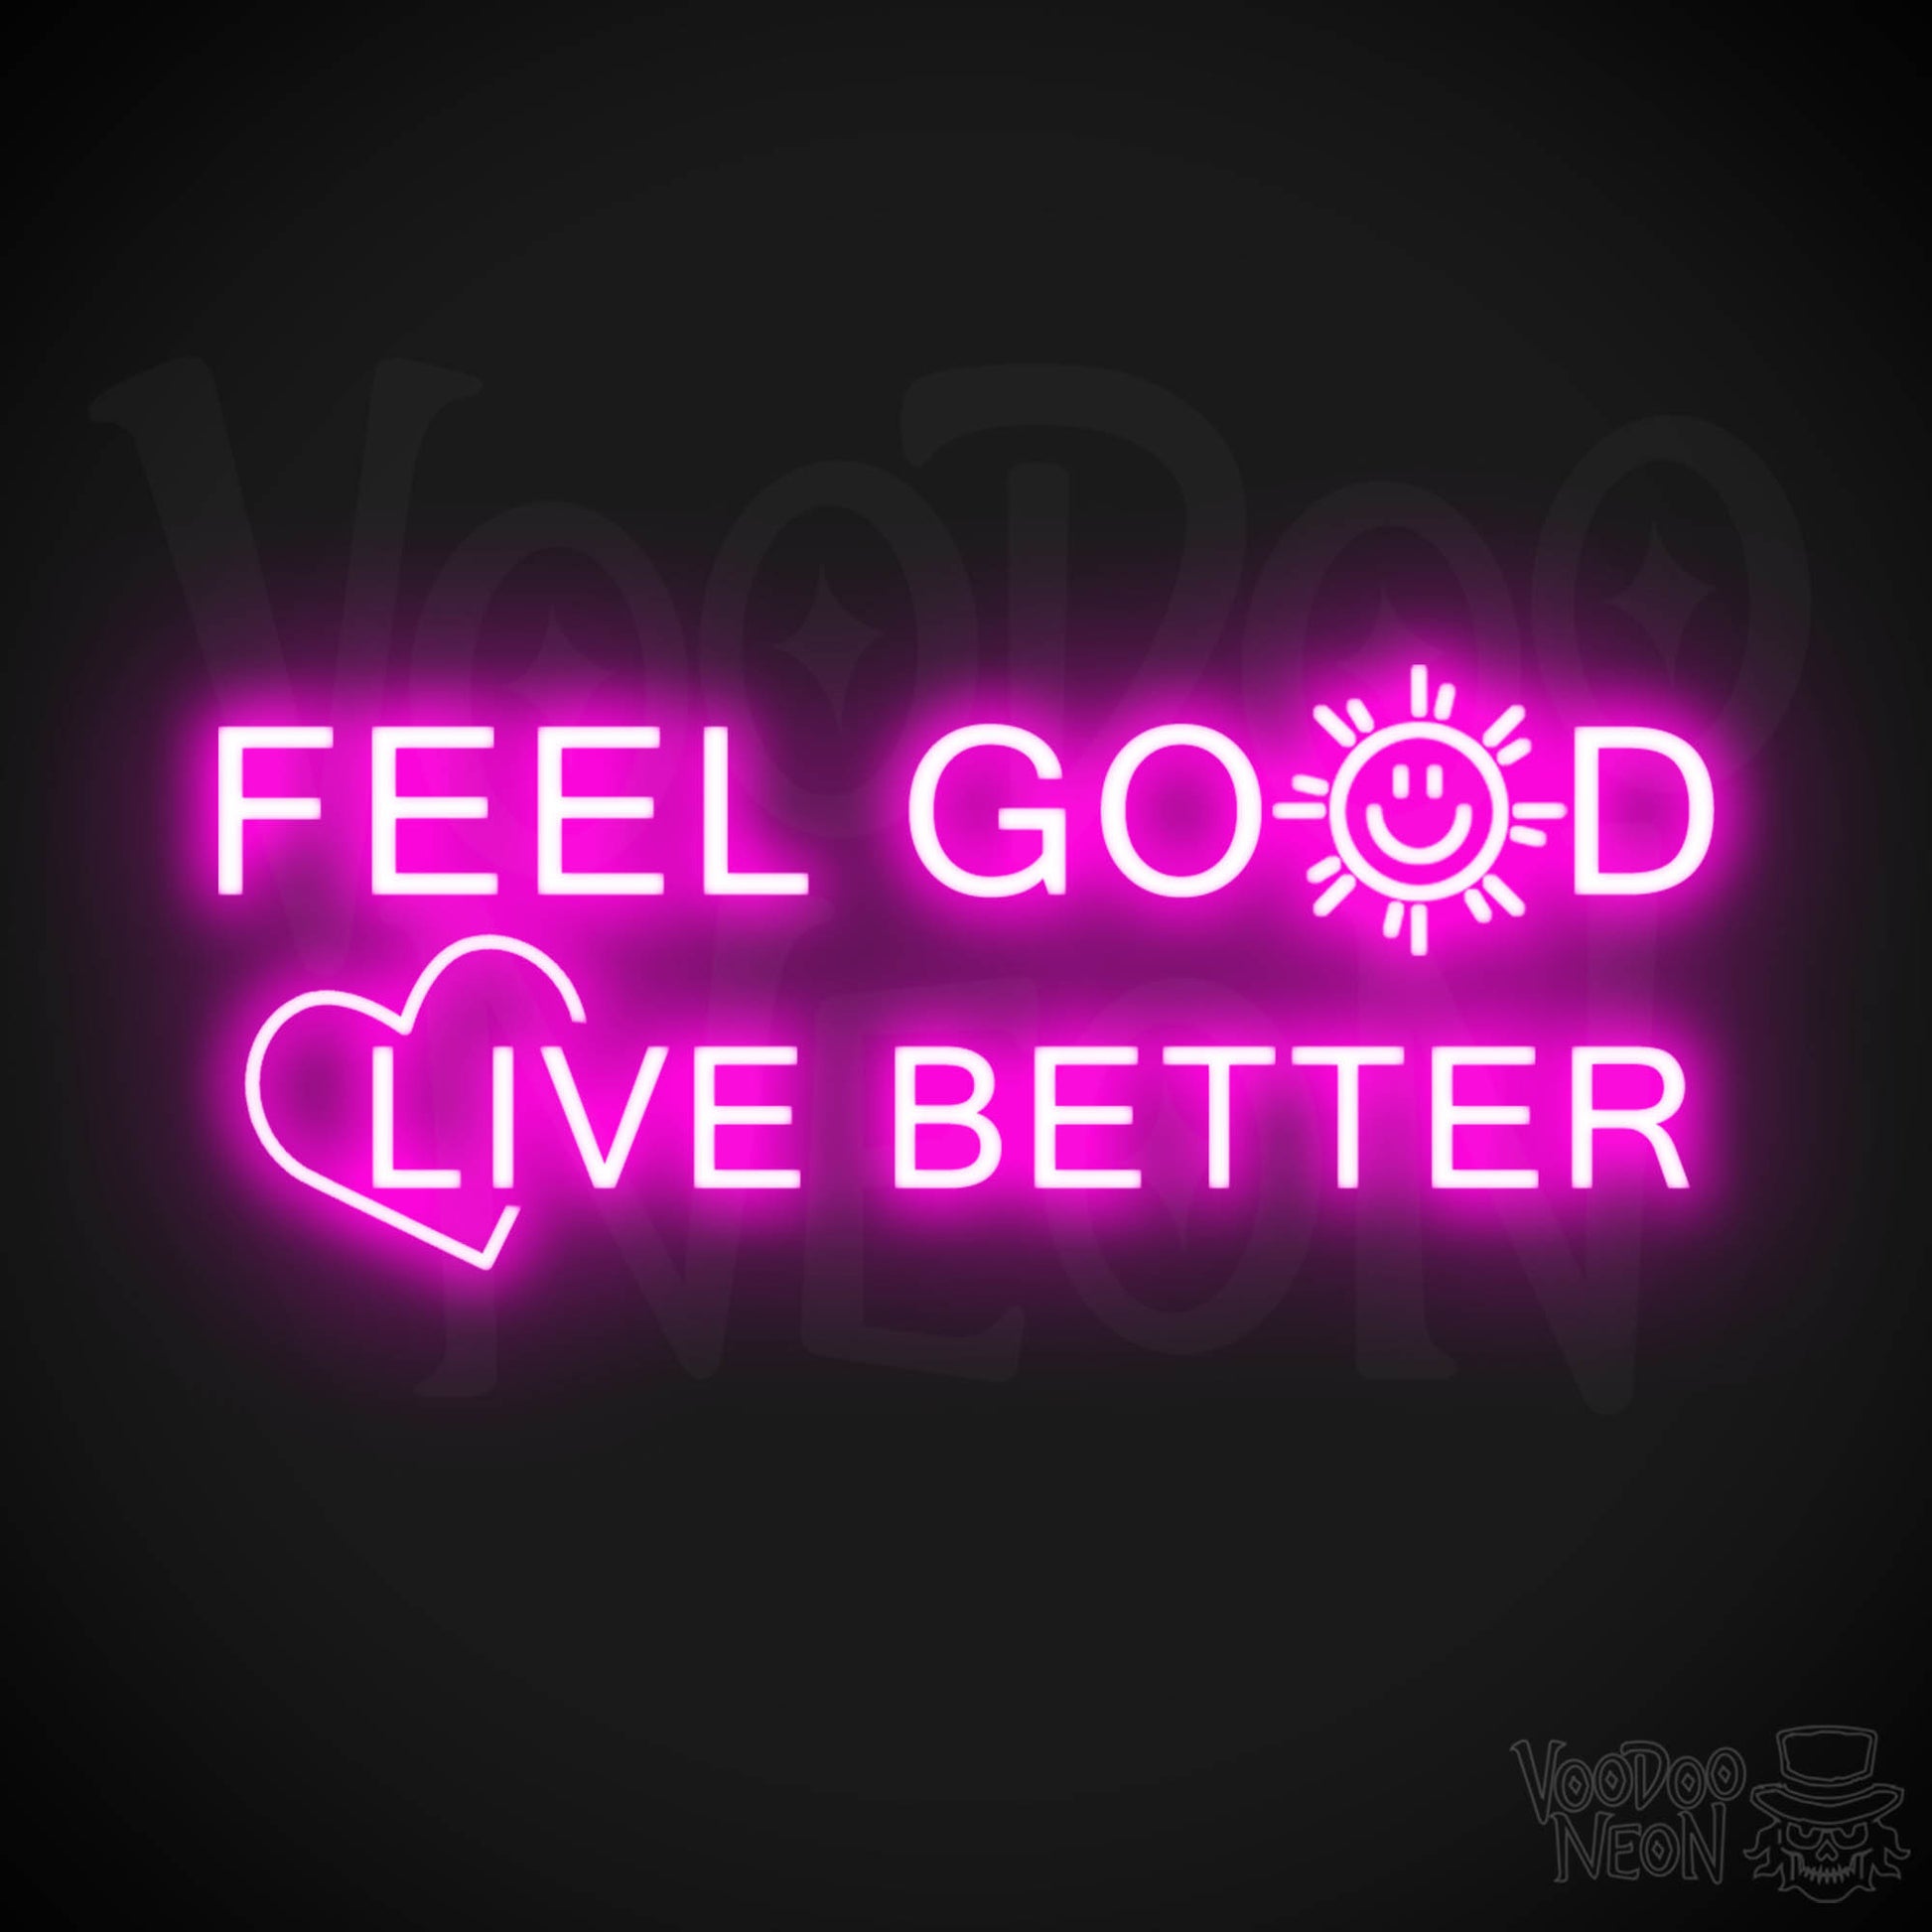 Feel Good Live Better Neon Sign - Feel Good Live Better Sign - Color Pink